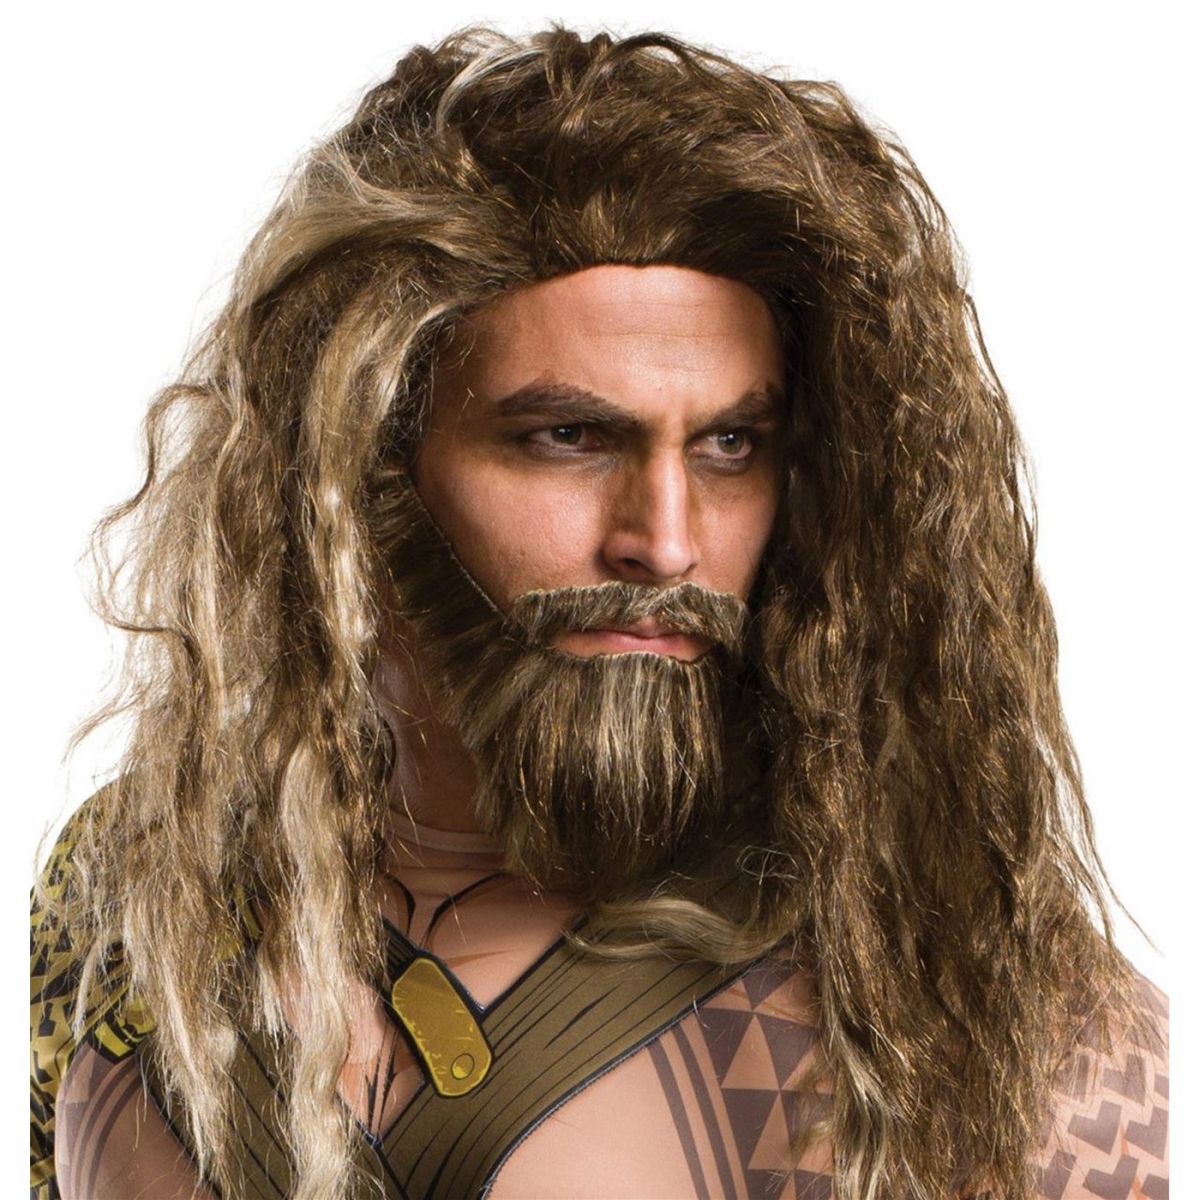 Picture of Aquaman costaquabeard Hair & Beard Wig Set